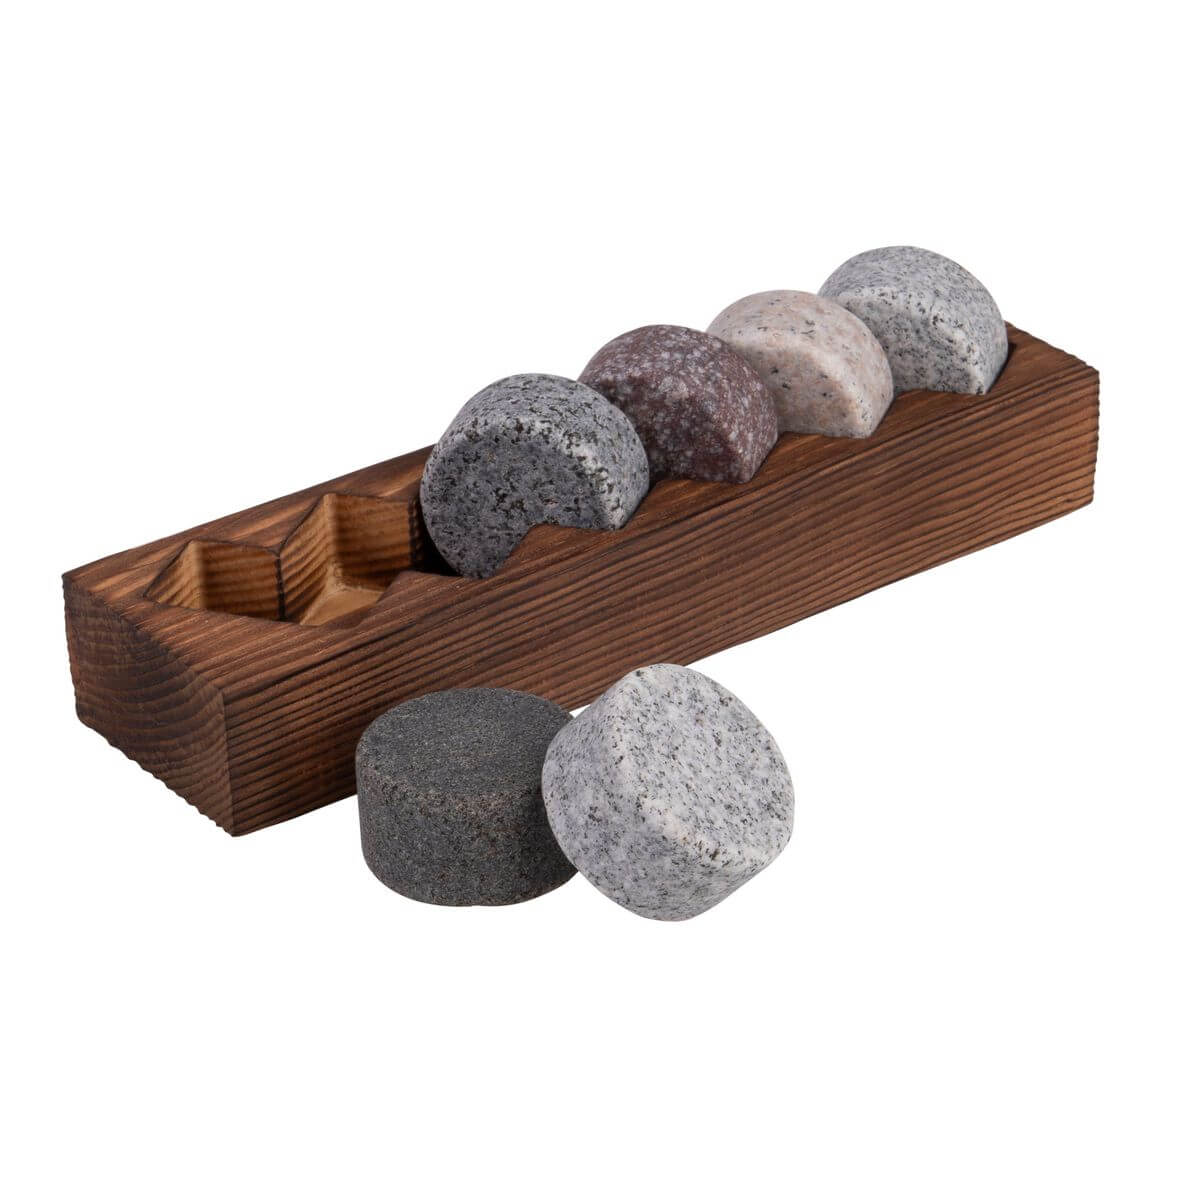 Six granite whiskey stones in a dark timber display case